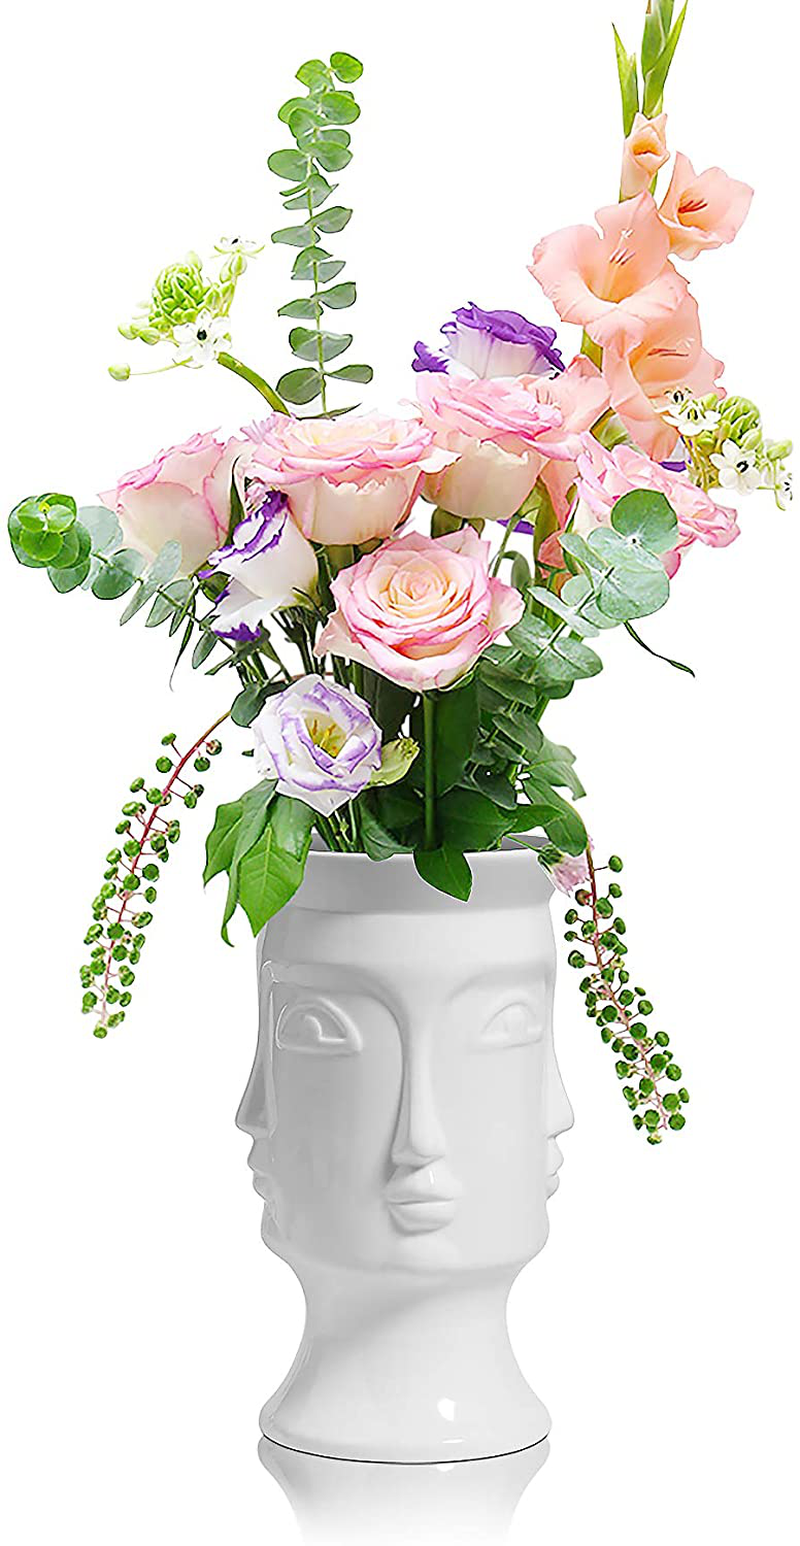 ComSaf Ceramic Flower Vase White, Modern Human Face Design Bud Vase Tall Posy Bouquet Centerpiece for Home, Wedding, Christmas Decoration (7 Inch Height) Home & Garden > Decor > Vases ComSaf 1  